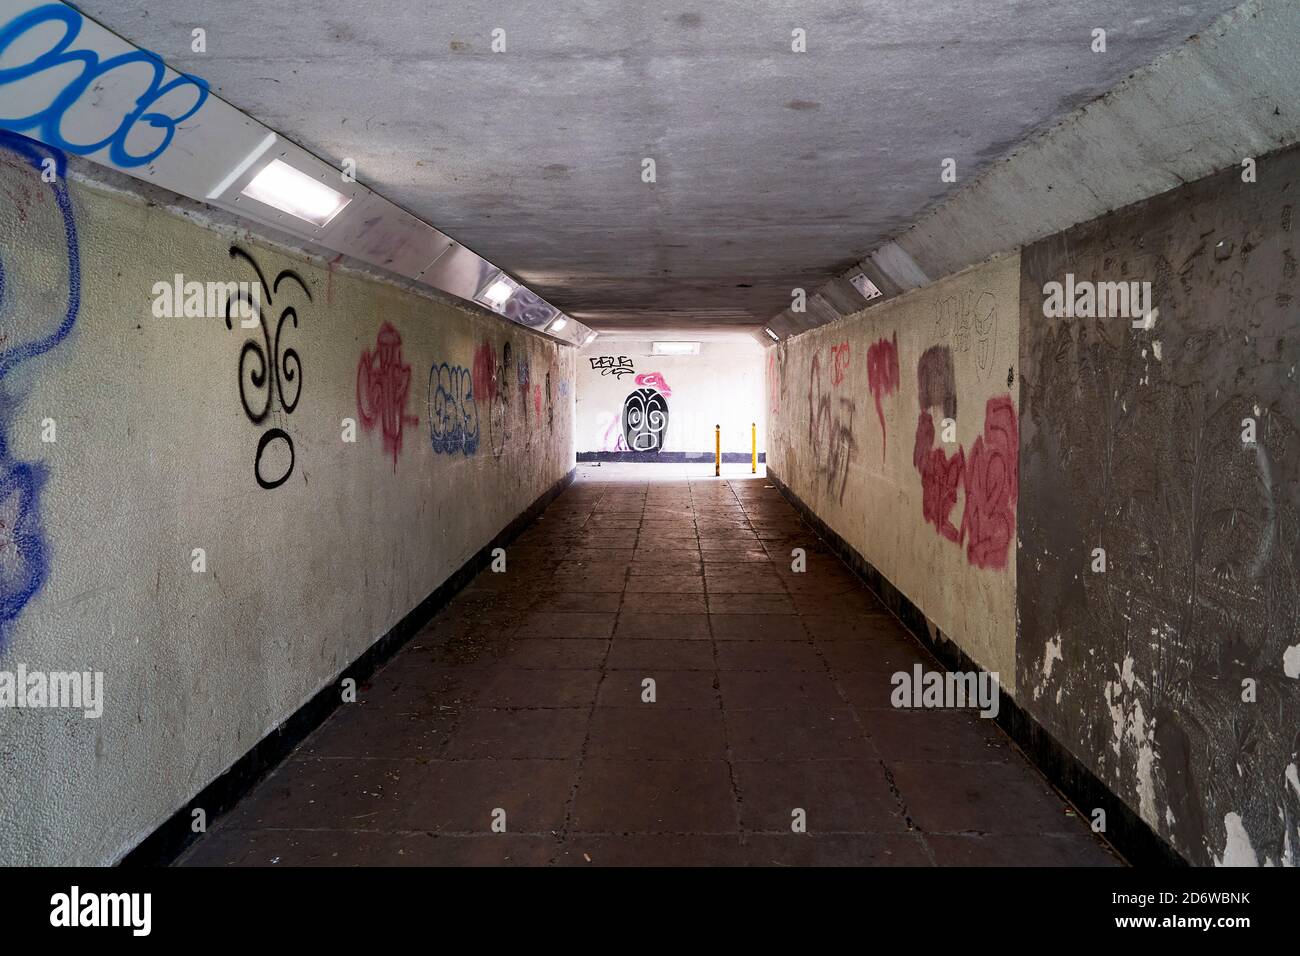 Graffiti on the walls of a pedestrian underpass Stock Photo